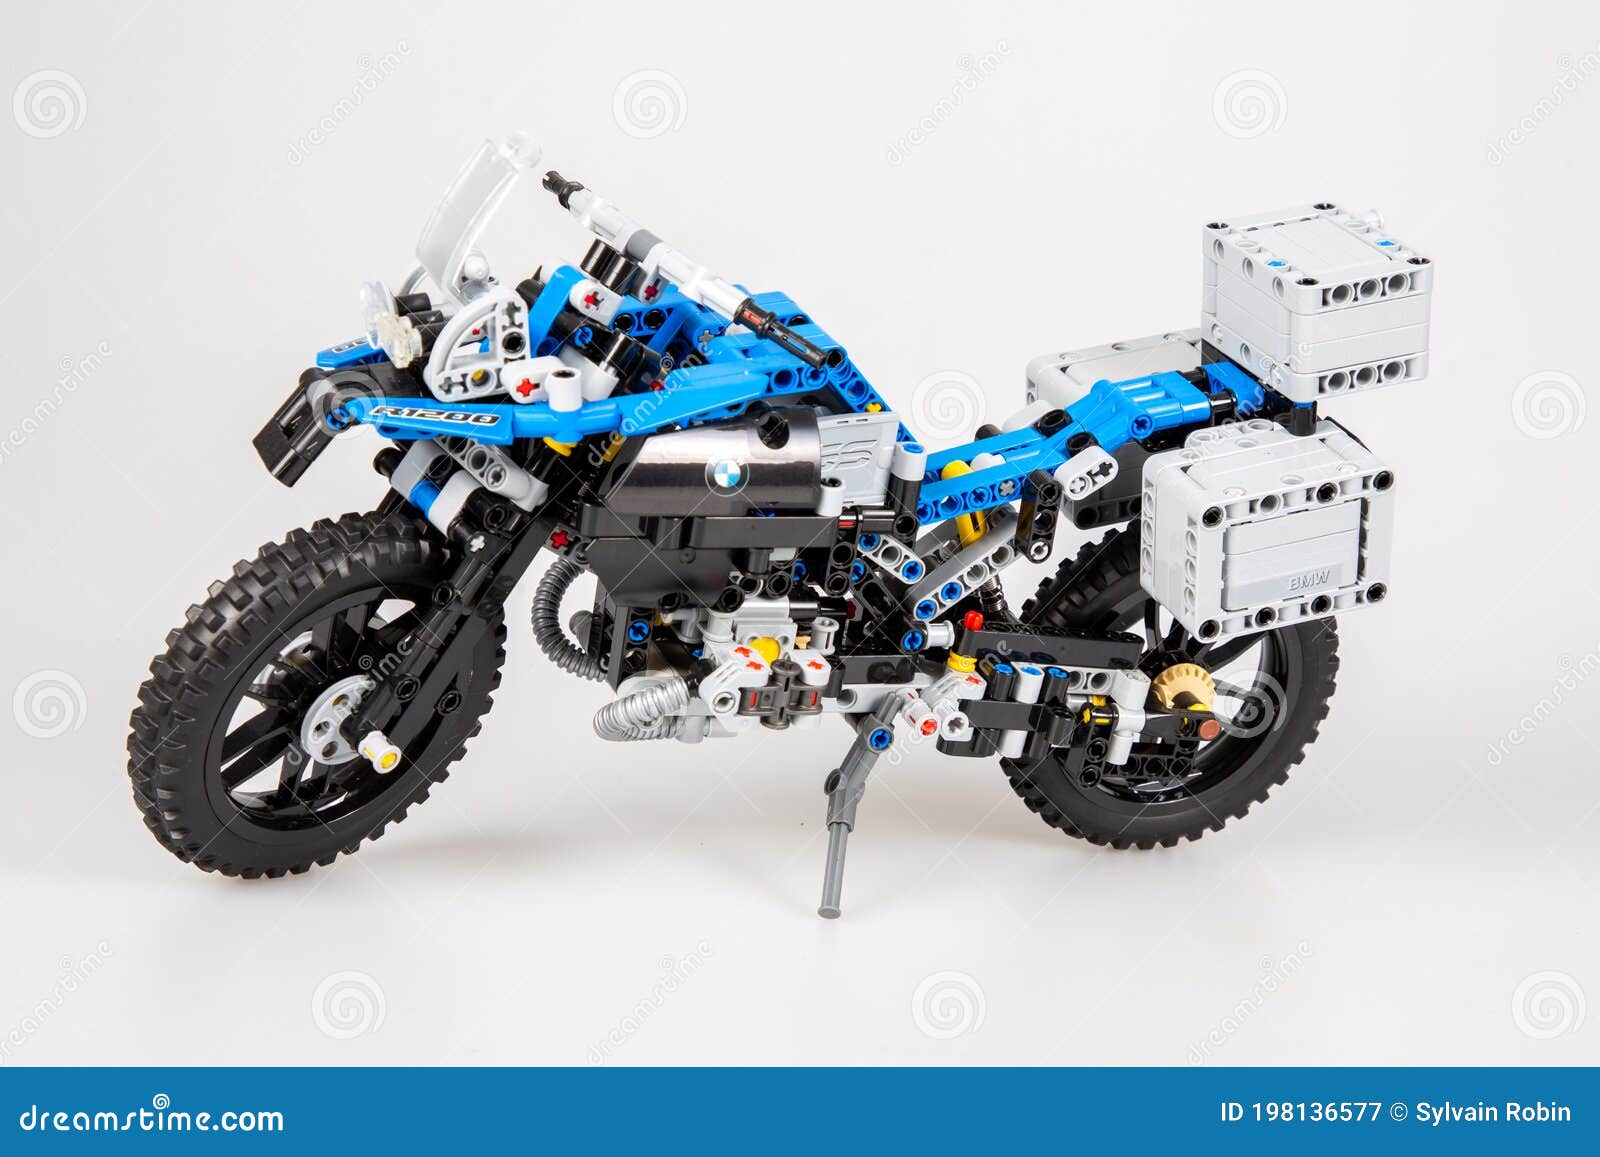 Lego Bricks Motorcycle BMW R 1200 GS Adventure Kit Editorial Photography -  Image of machine, design: 198136577